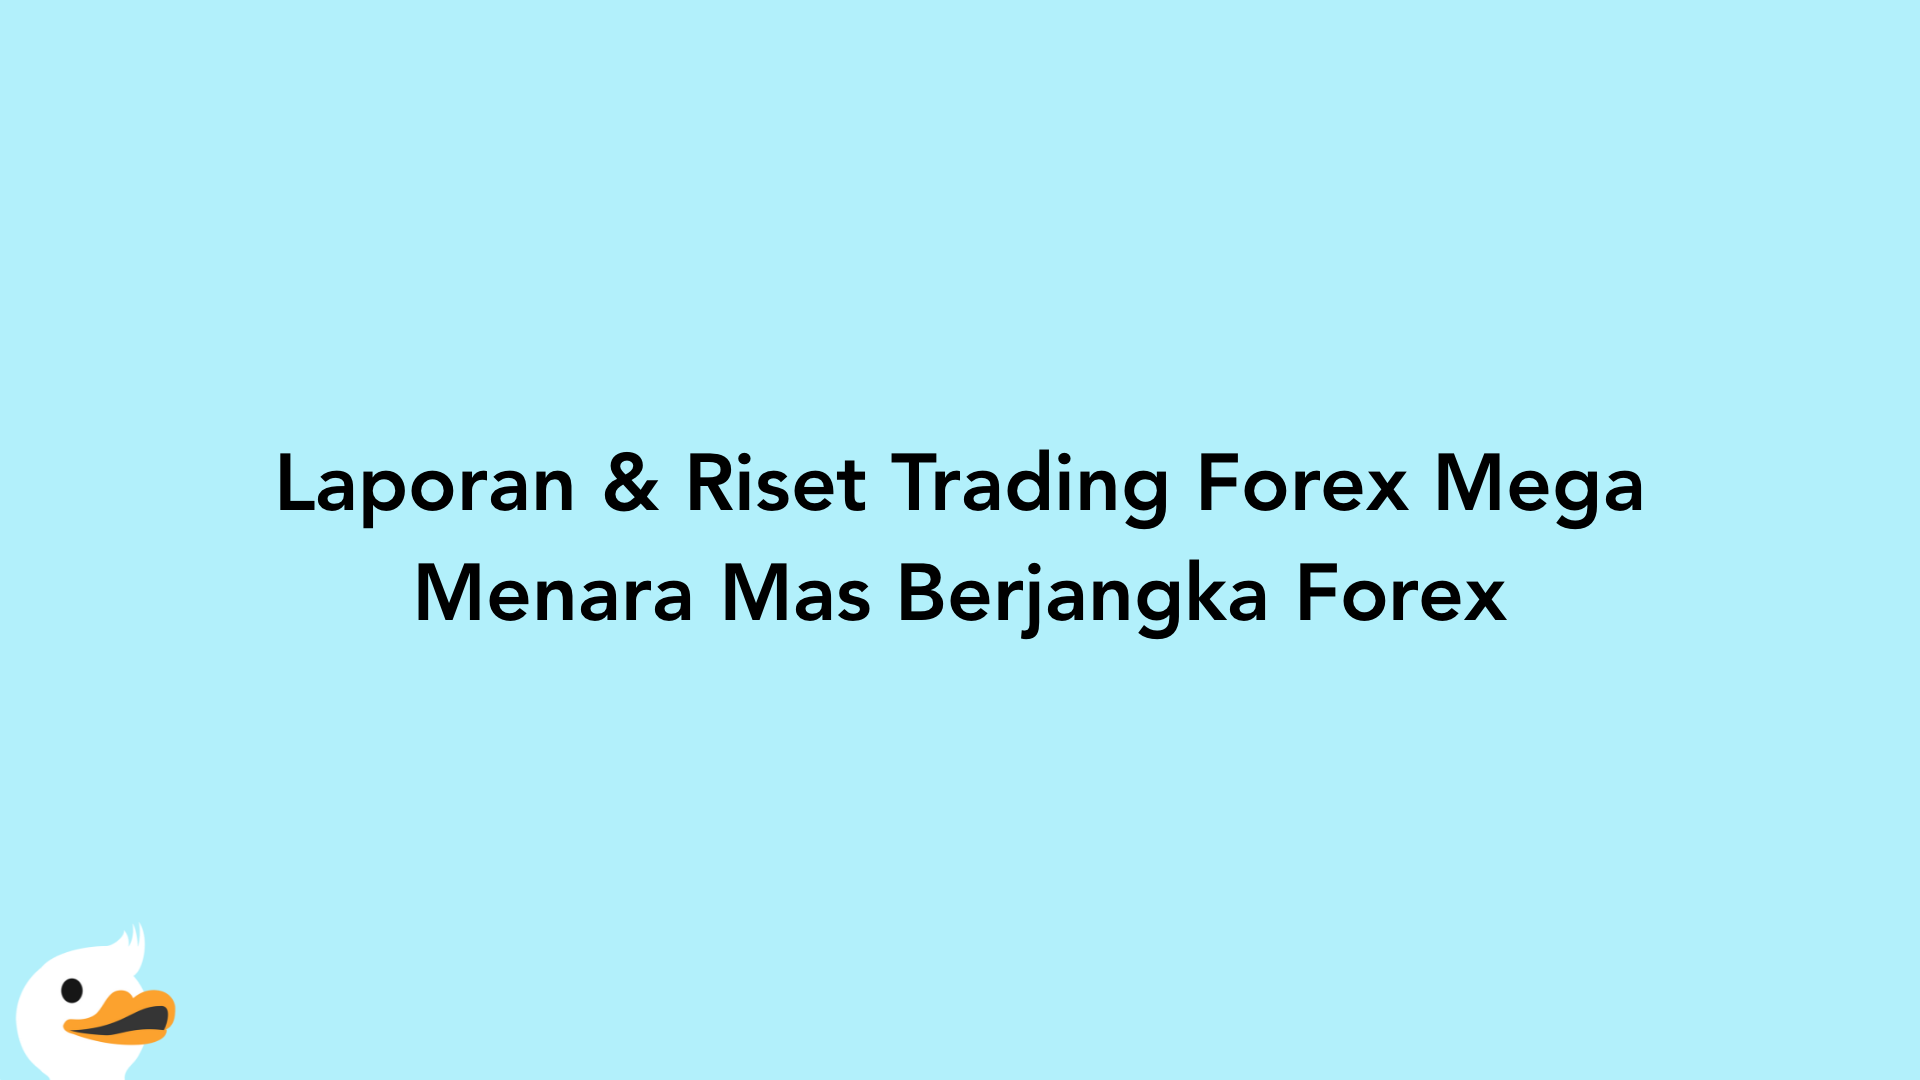 Laporan & Riset Trading Forex Mega Menara Mas Berjangka Forex